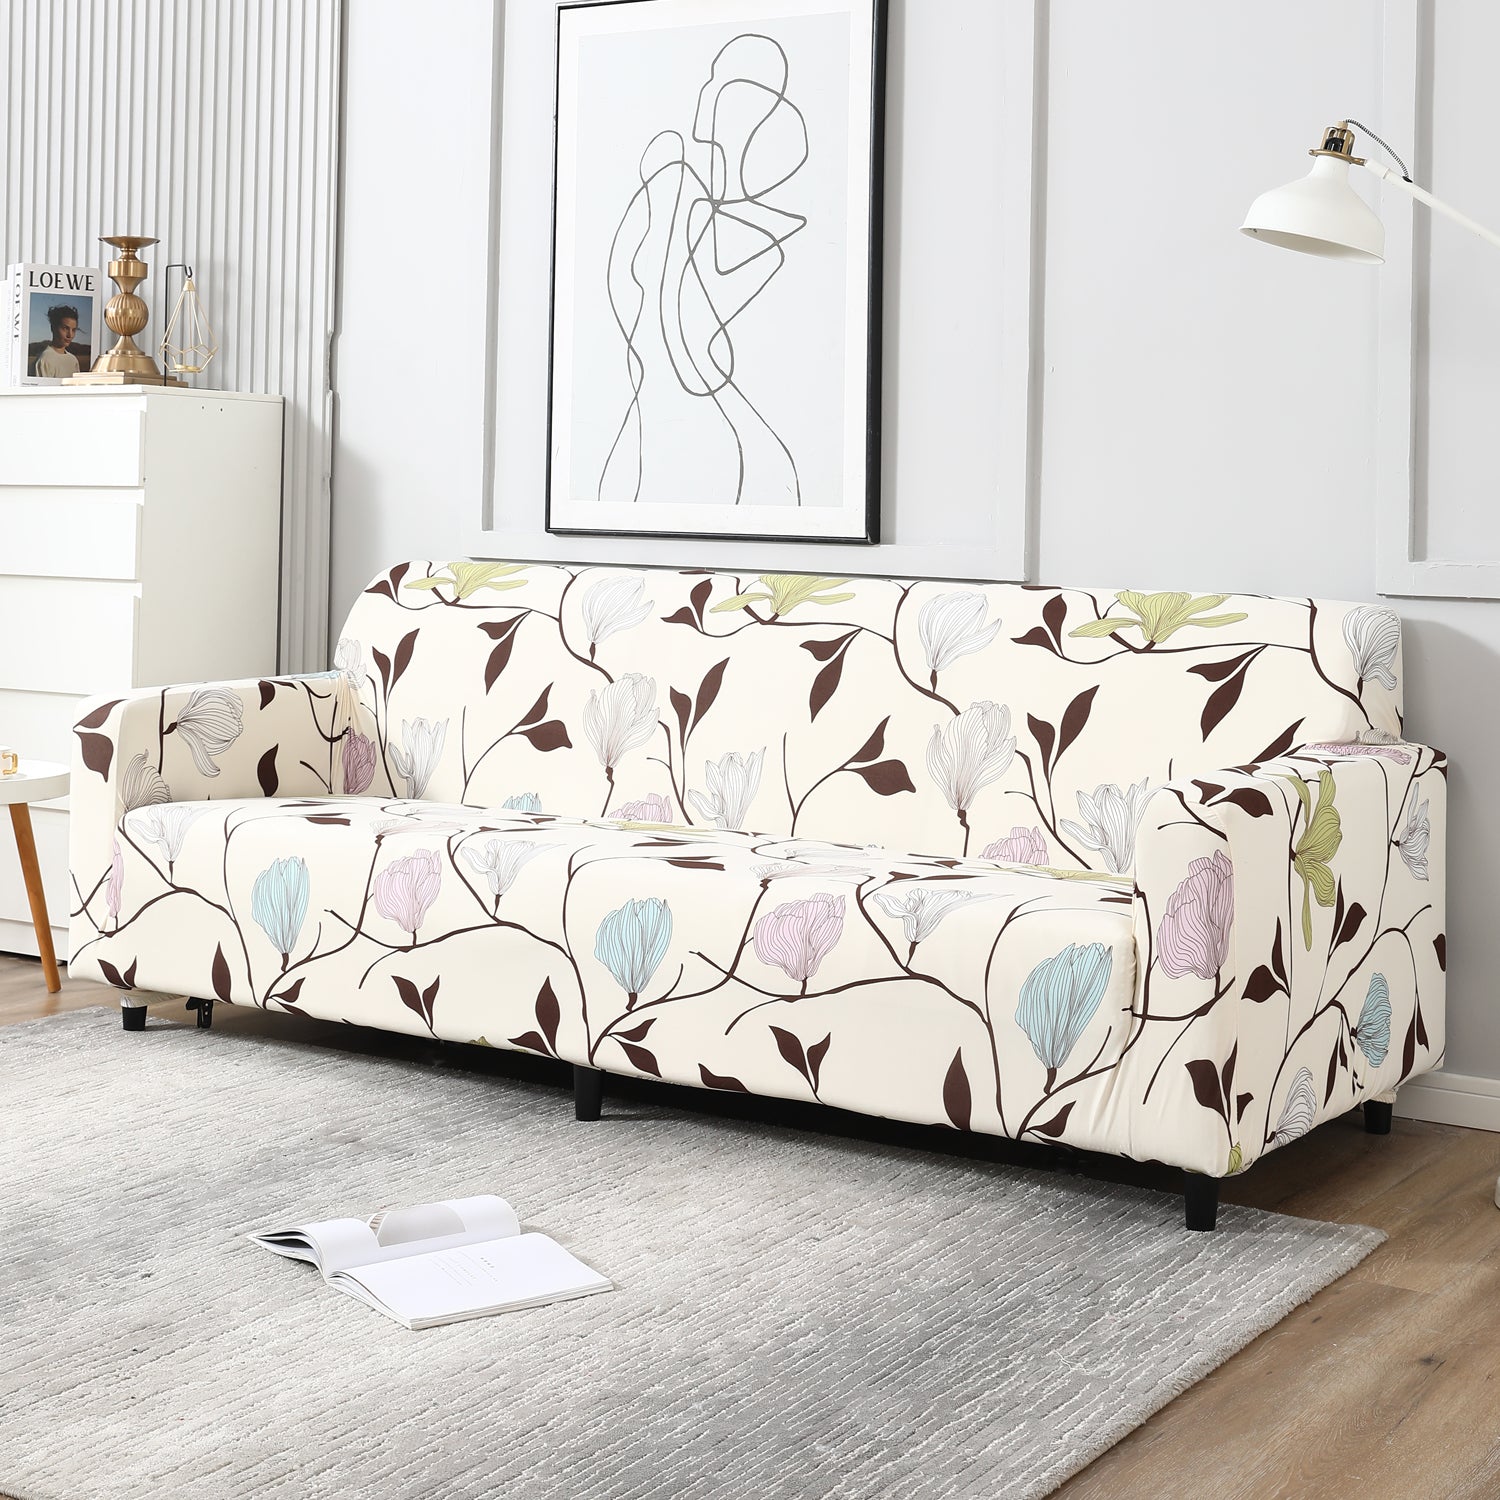 Elastic Stretchable Printed Sofa Cover, Floral Print